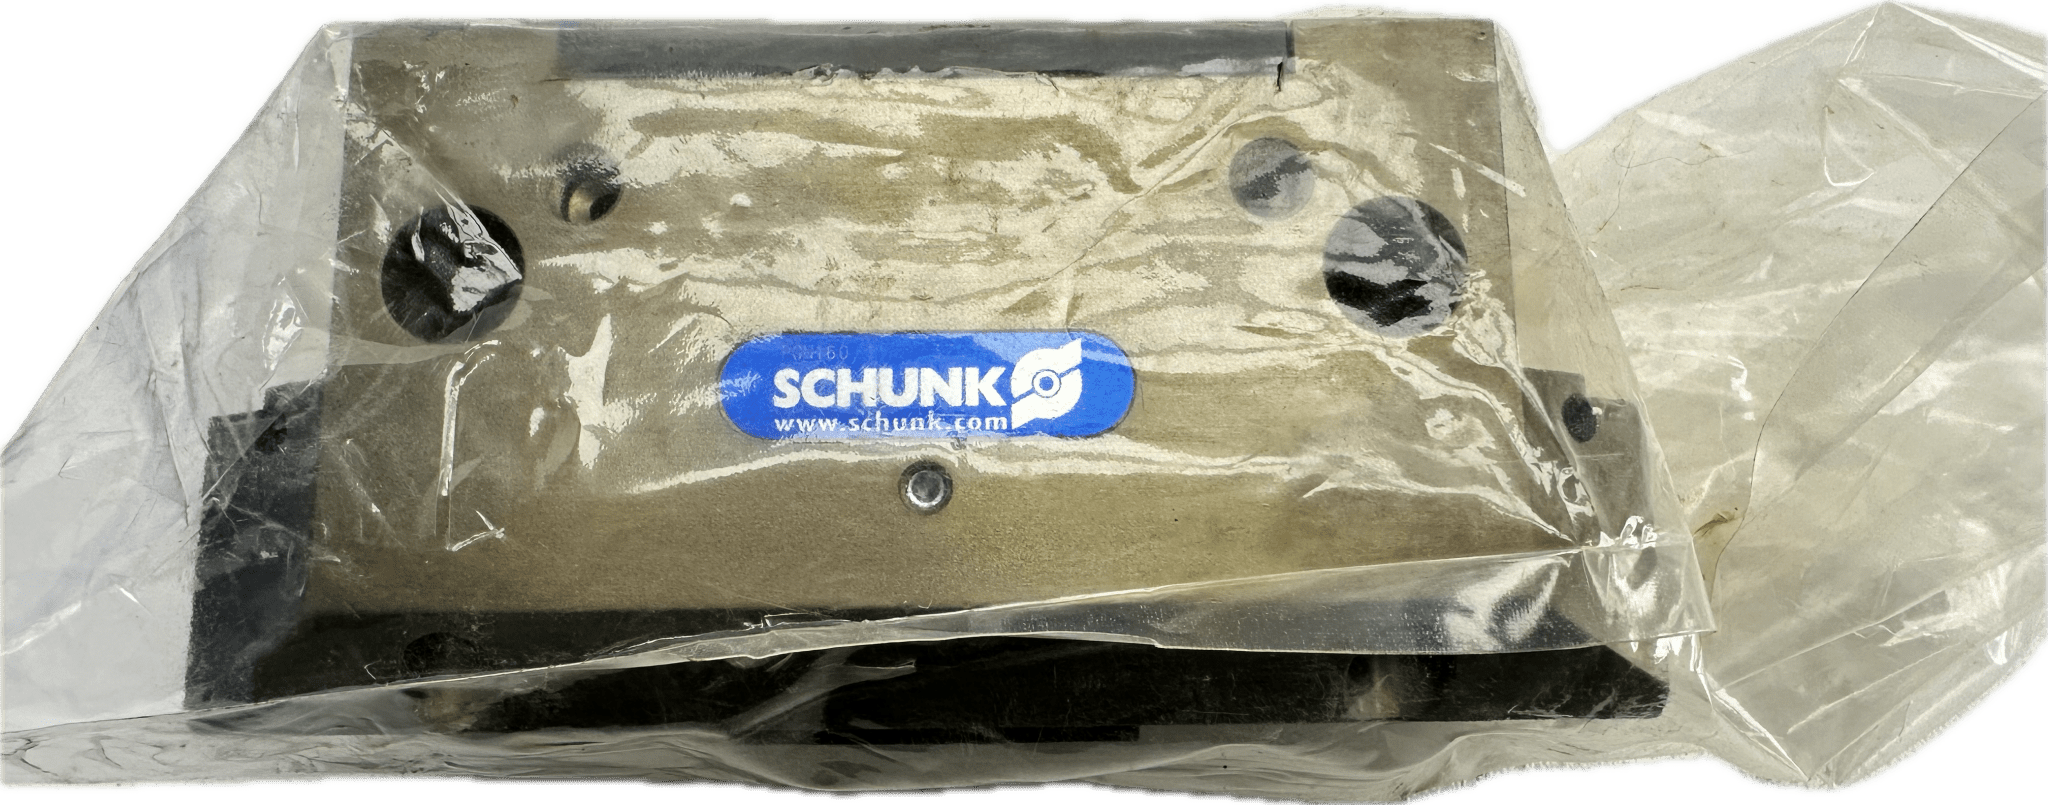 Schunk Universalgreifer PGN 370104 PGN 160/1 - #product_category# | Klenk Maschinenhandel